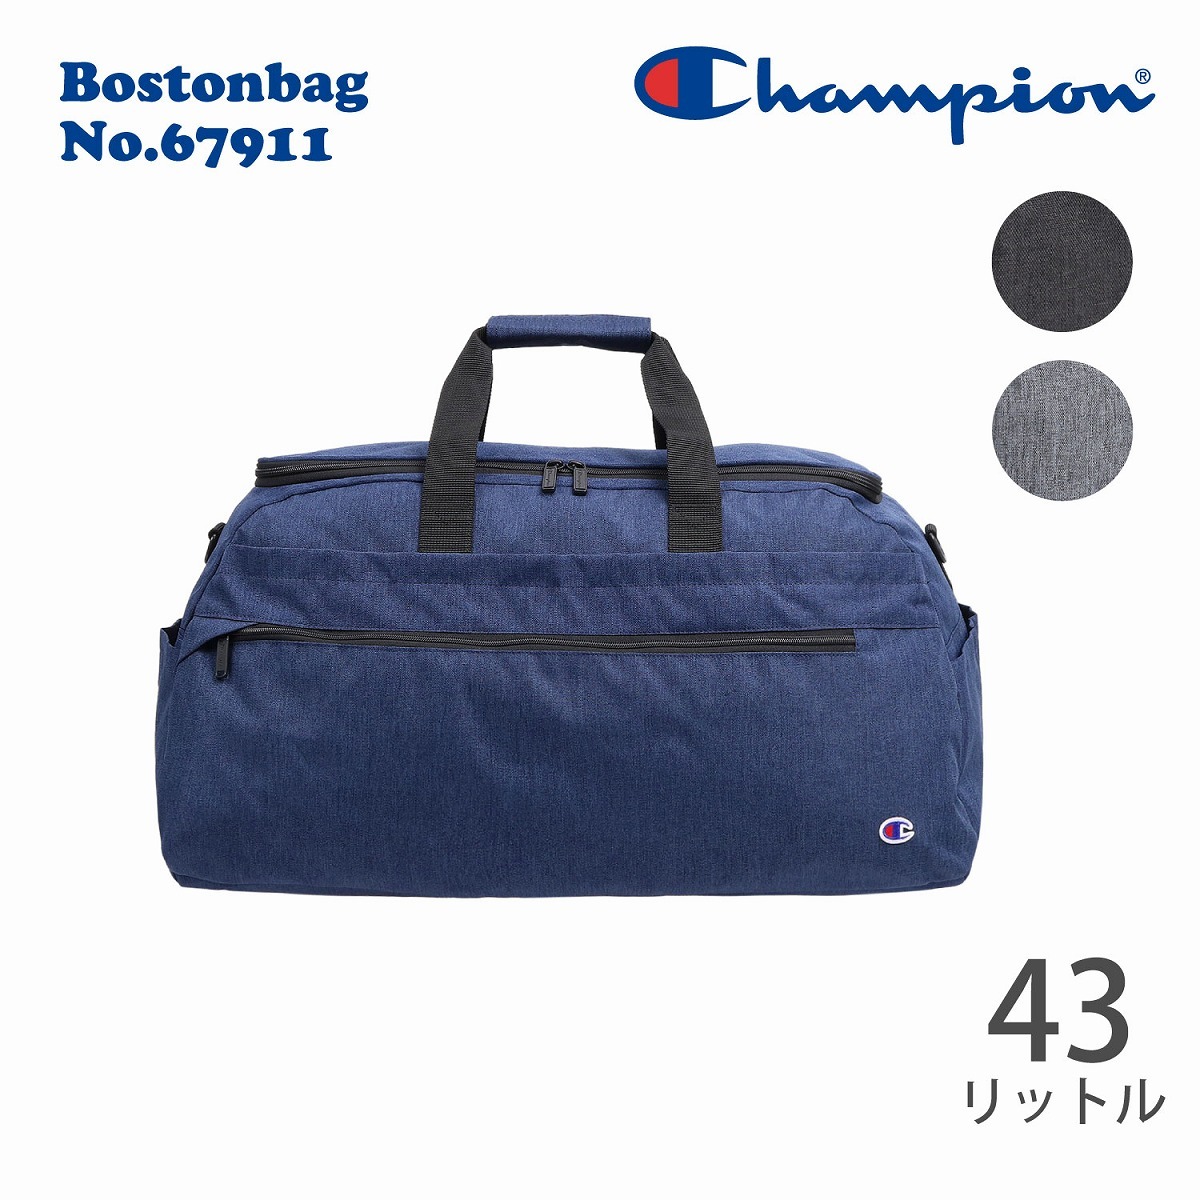 Champion ボストンバッグ メンズ 男の子 旅行 No.67911 43L